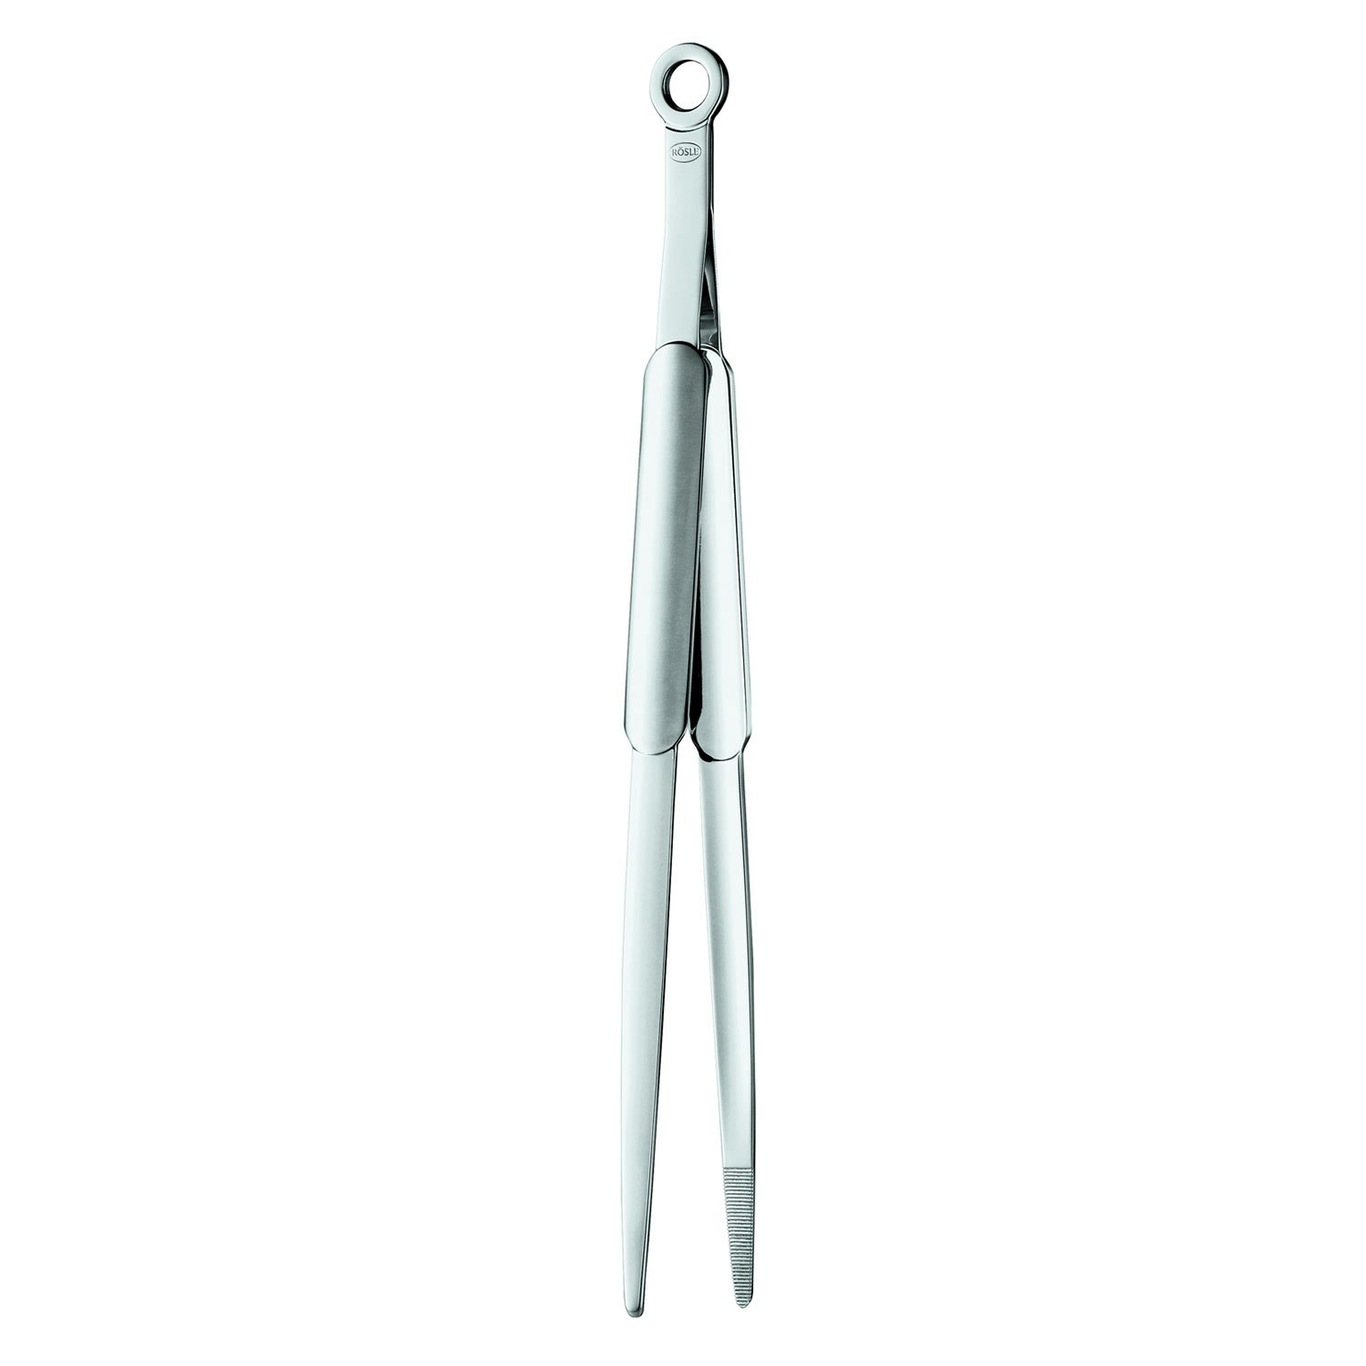 https://royaldesign.com/image/2/rosle-rosle-chefs-tweezers-31cm-stainless-steel-0?w=800&quality=80